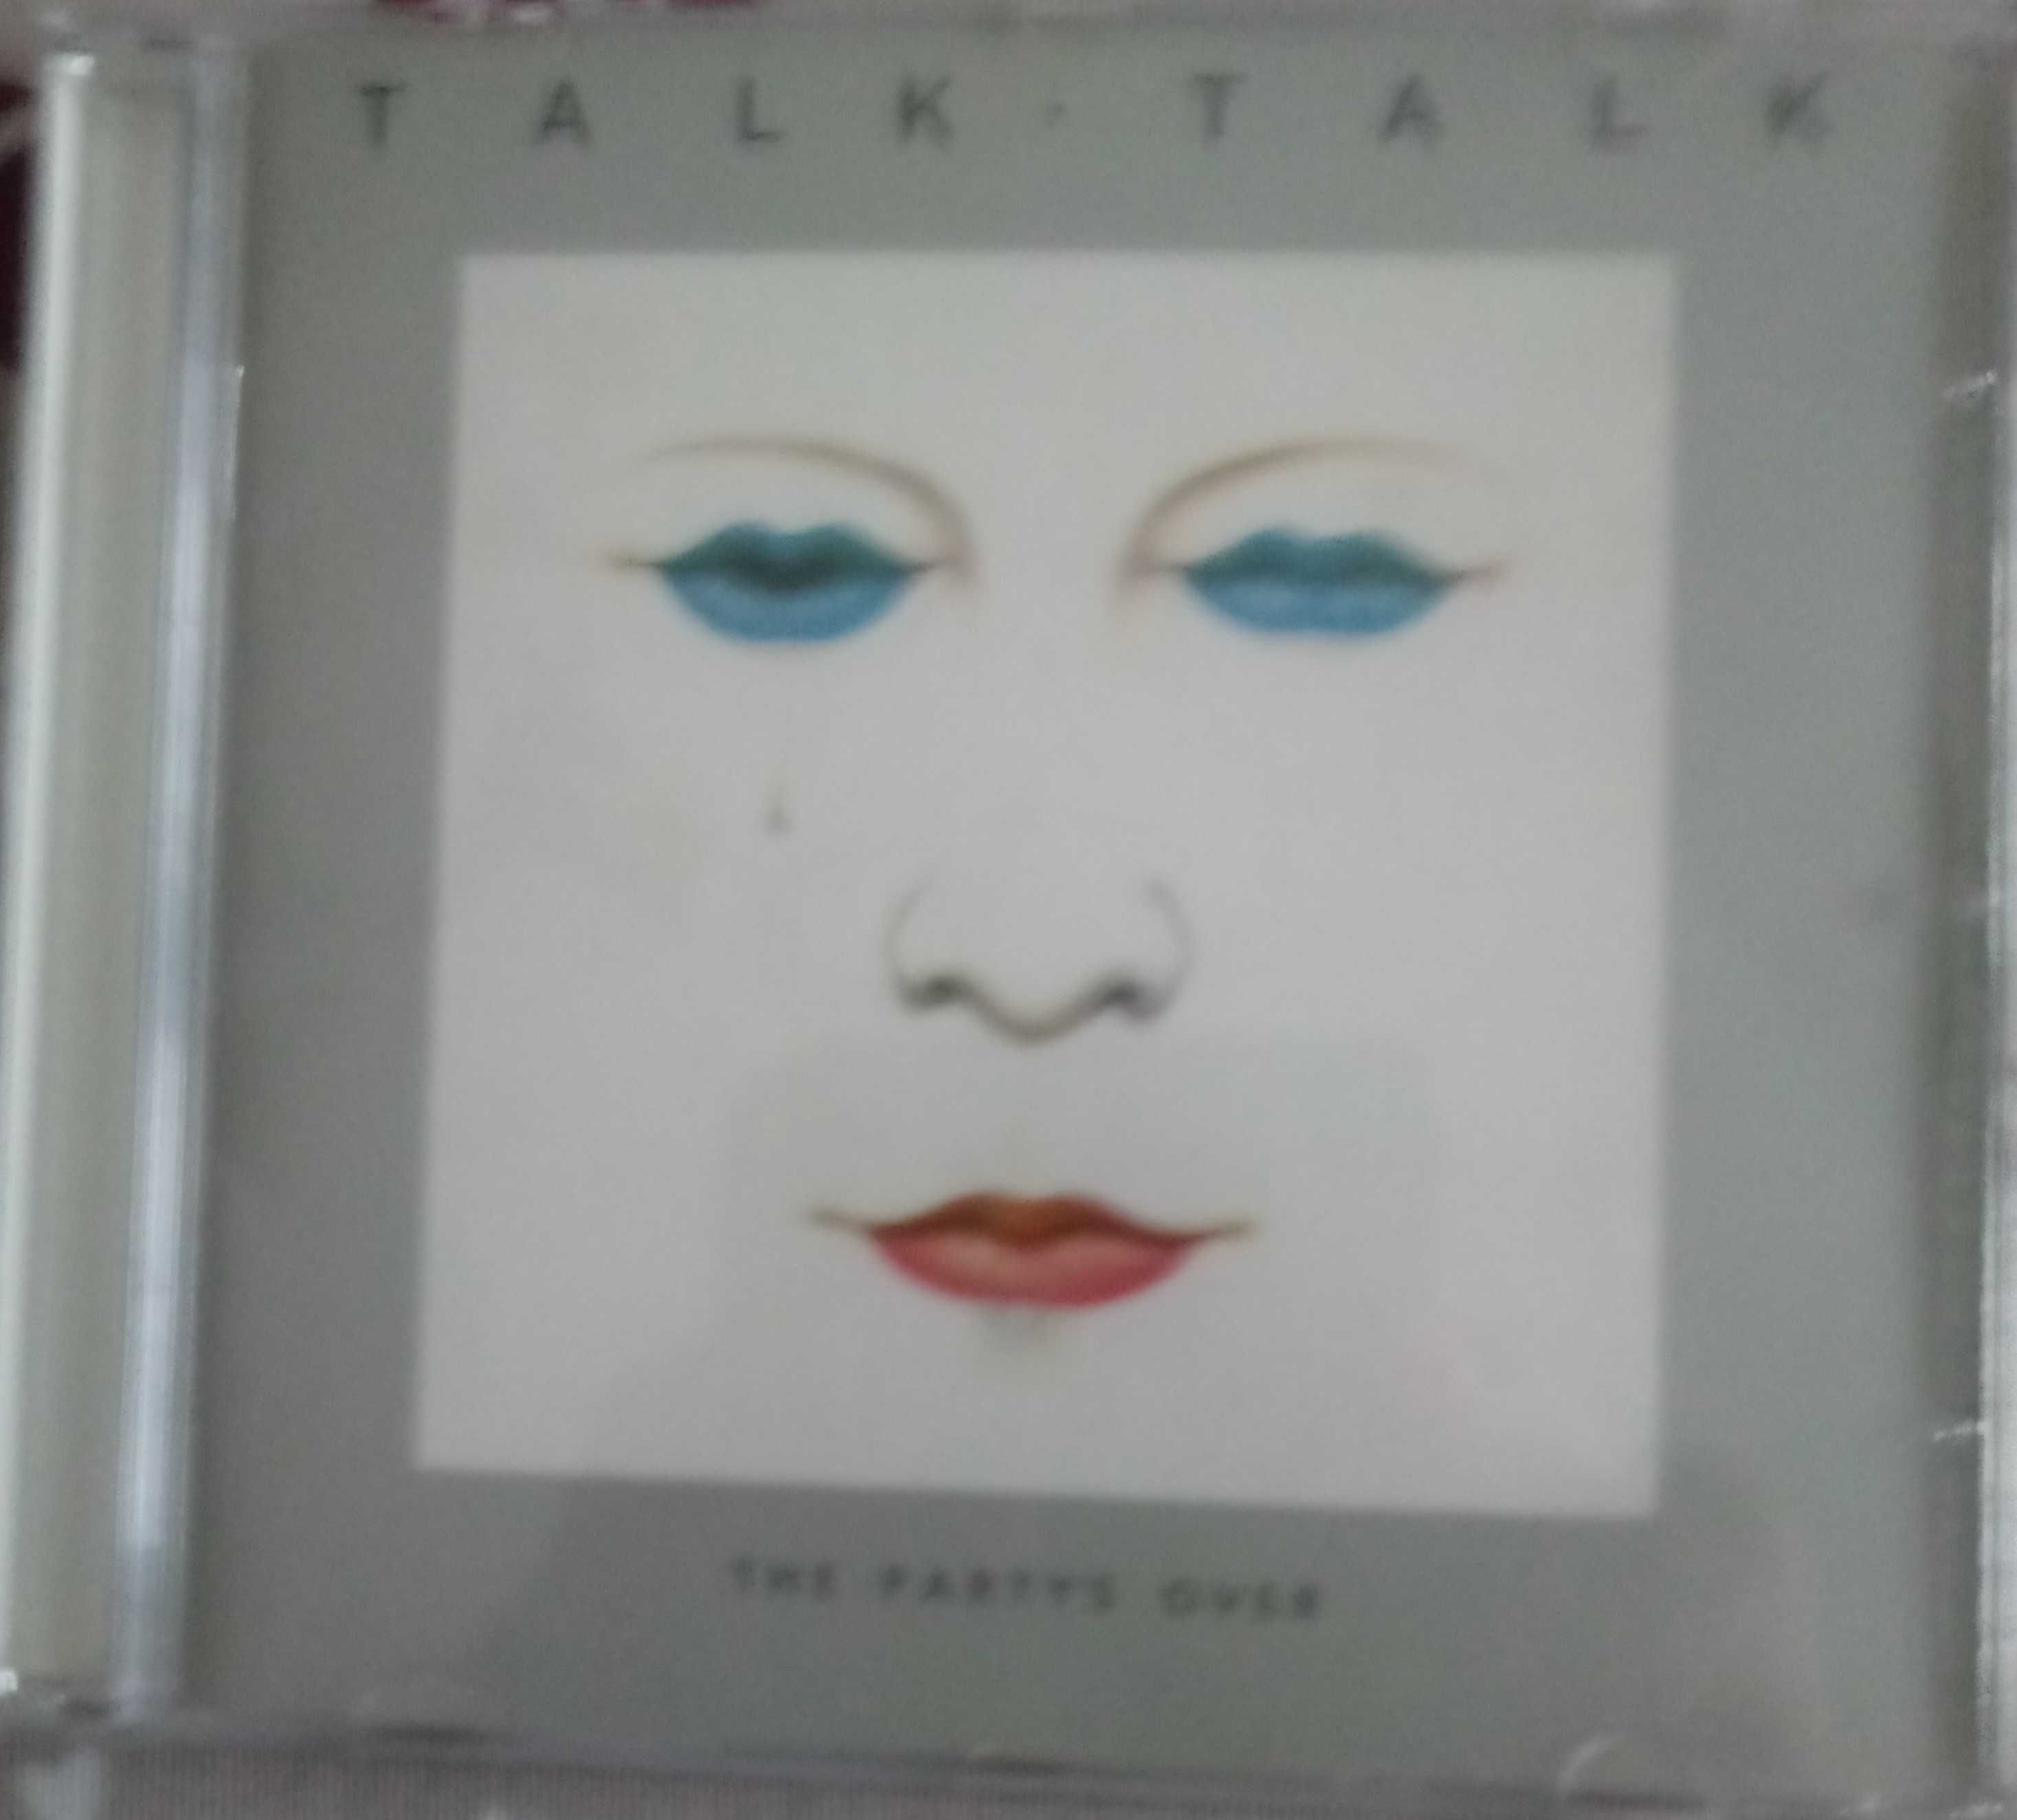 Talk talk - płyty cd